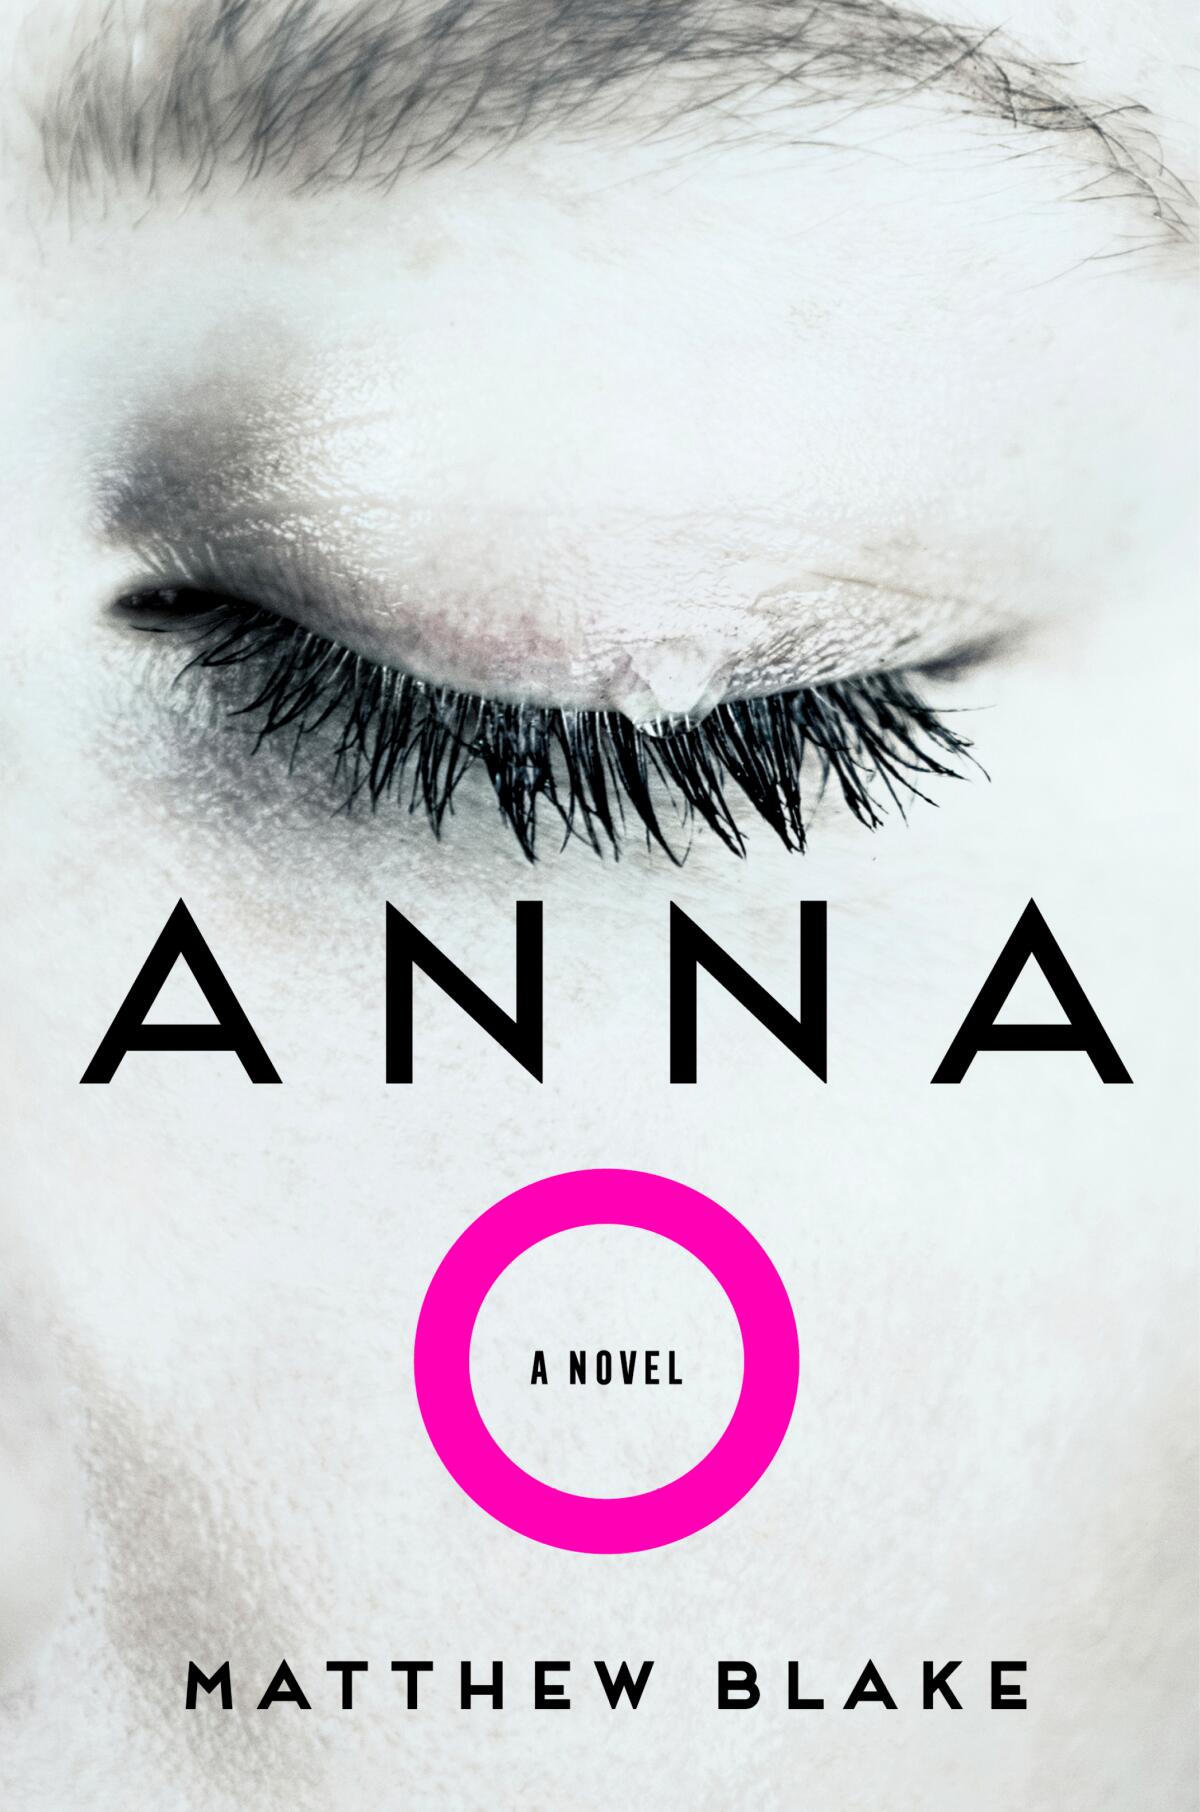 Cover of "Anna O.: A Novel" by Matthew Blake